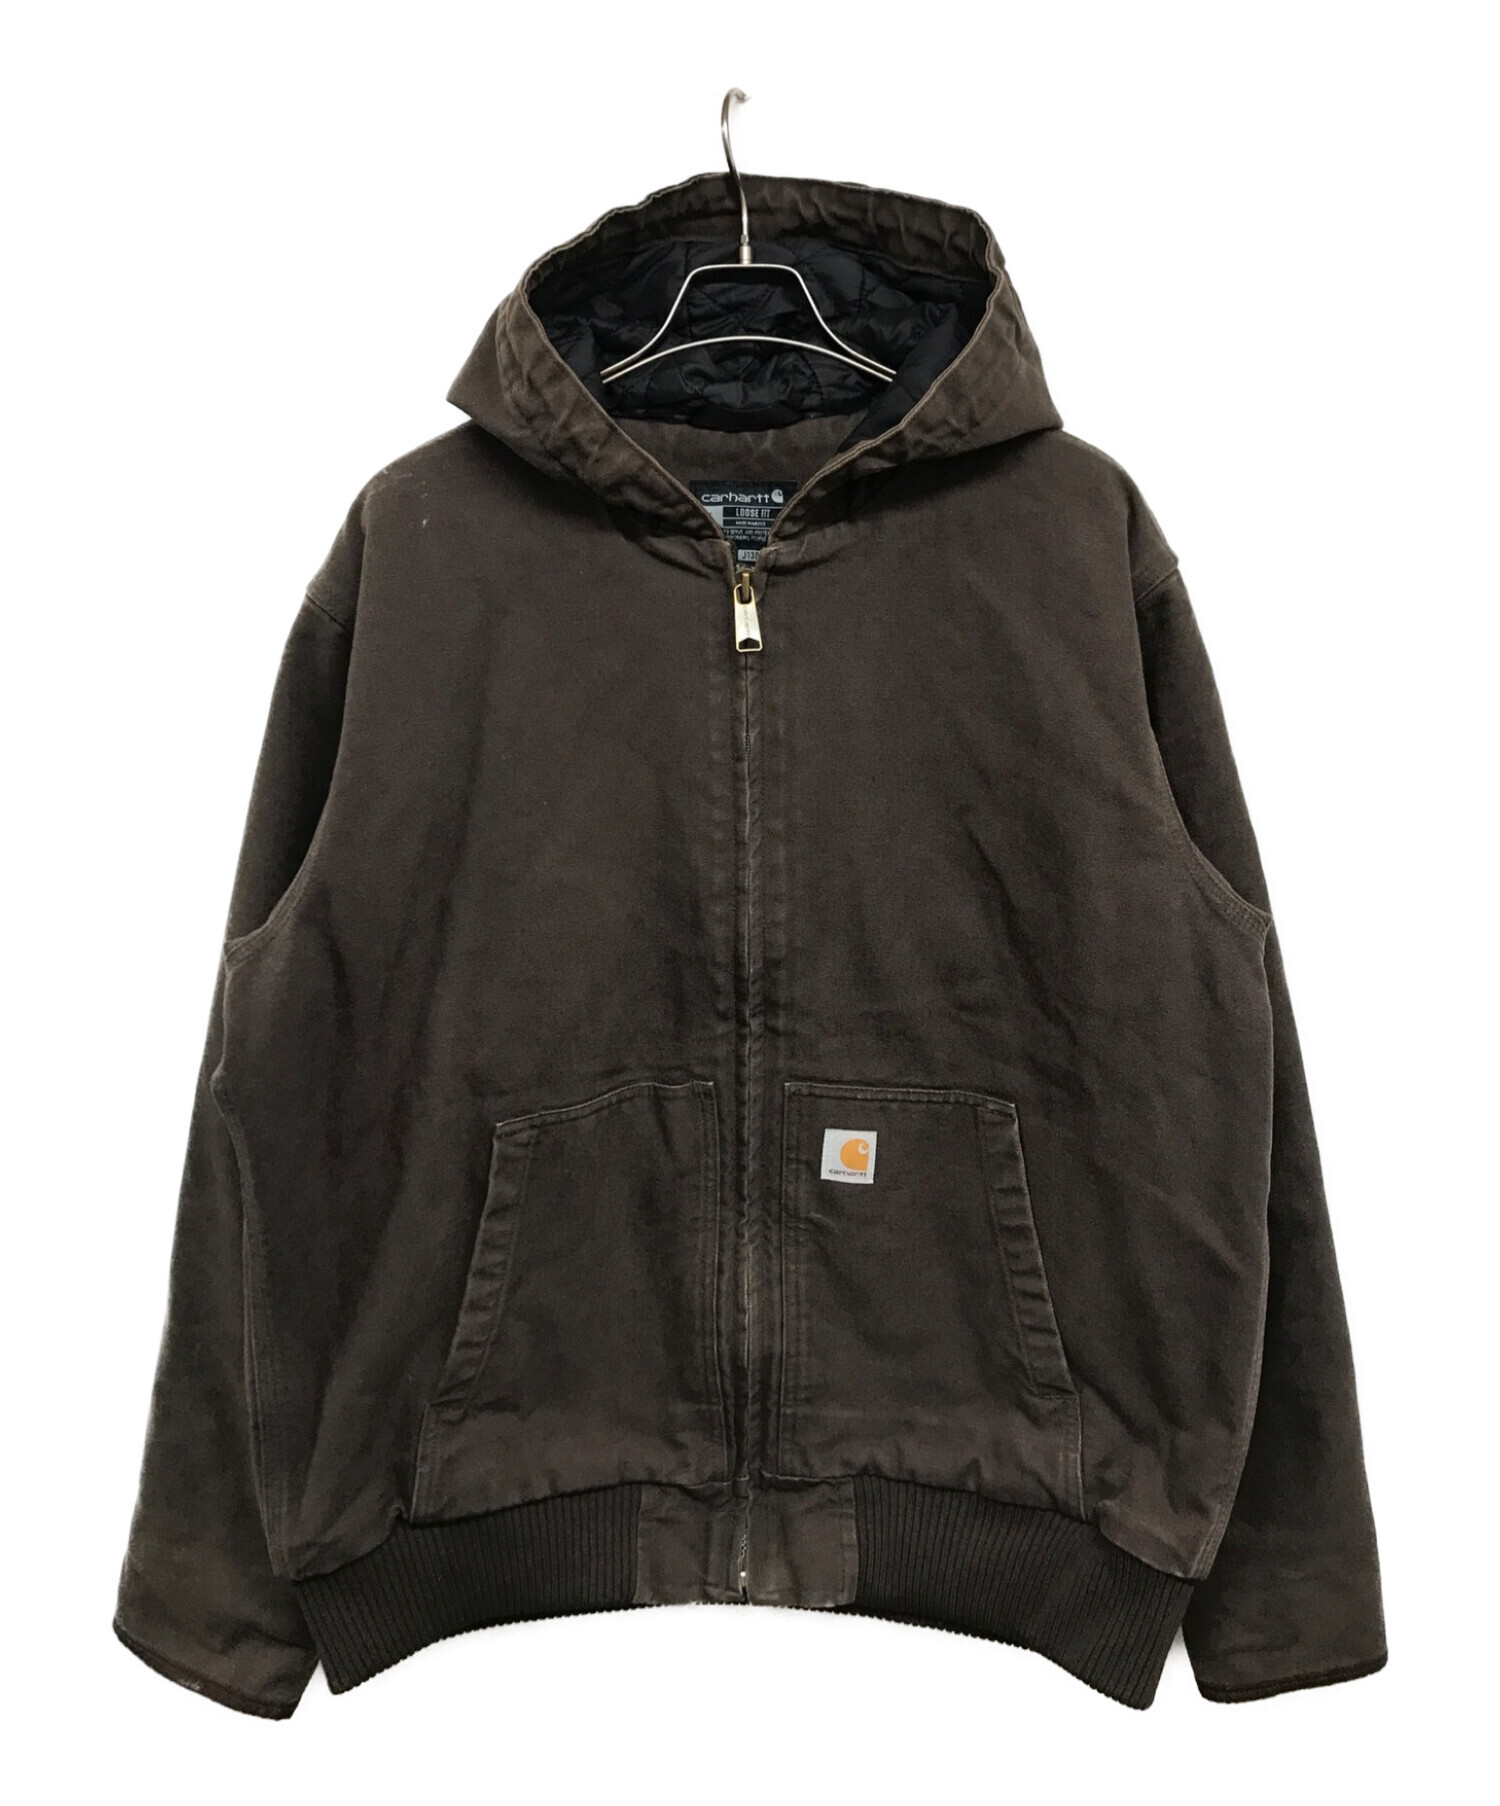 Carhartt active jacket black L定価37400円